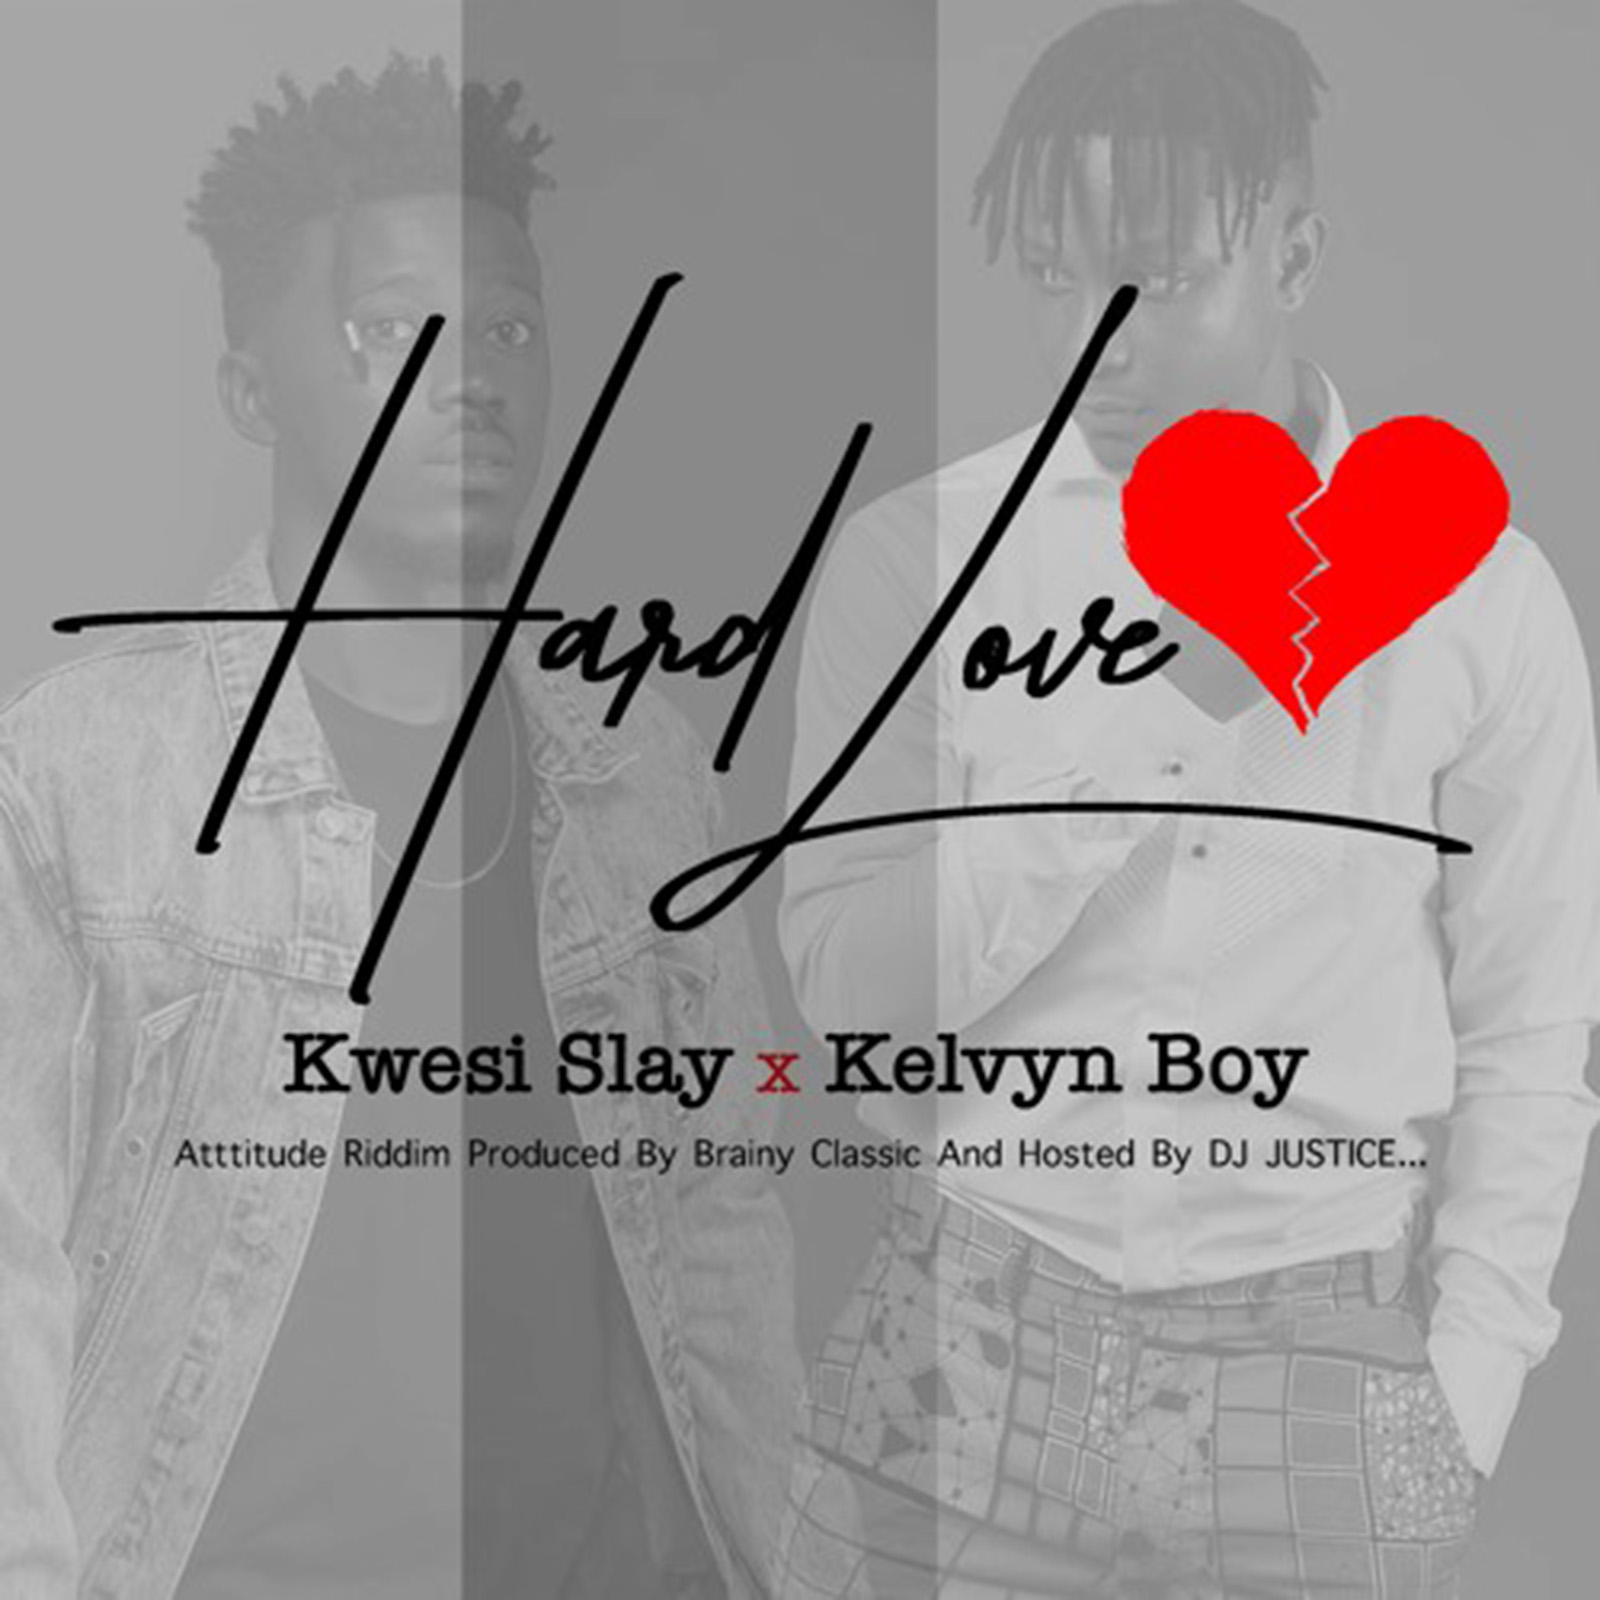 Hard Love by Kwesi Slay feat. Kelvyn Boy